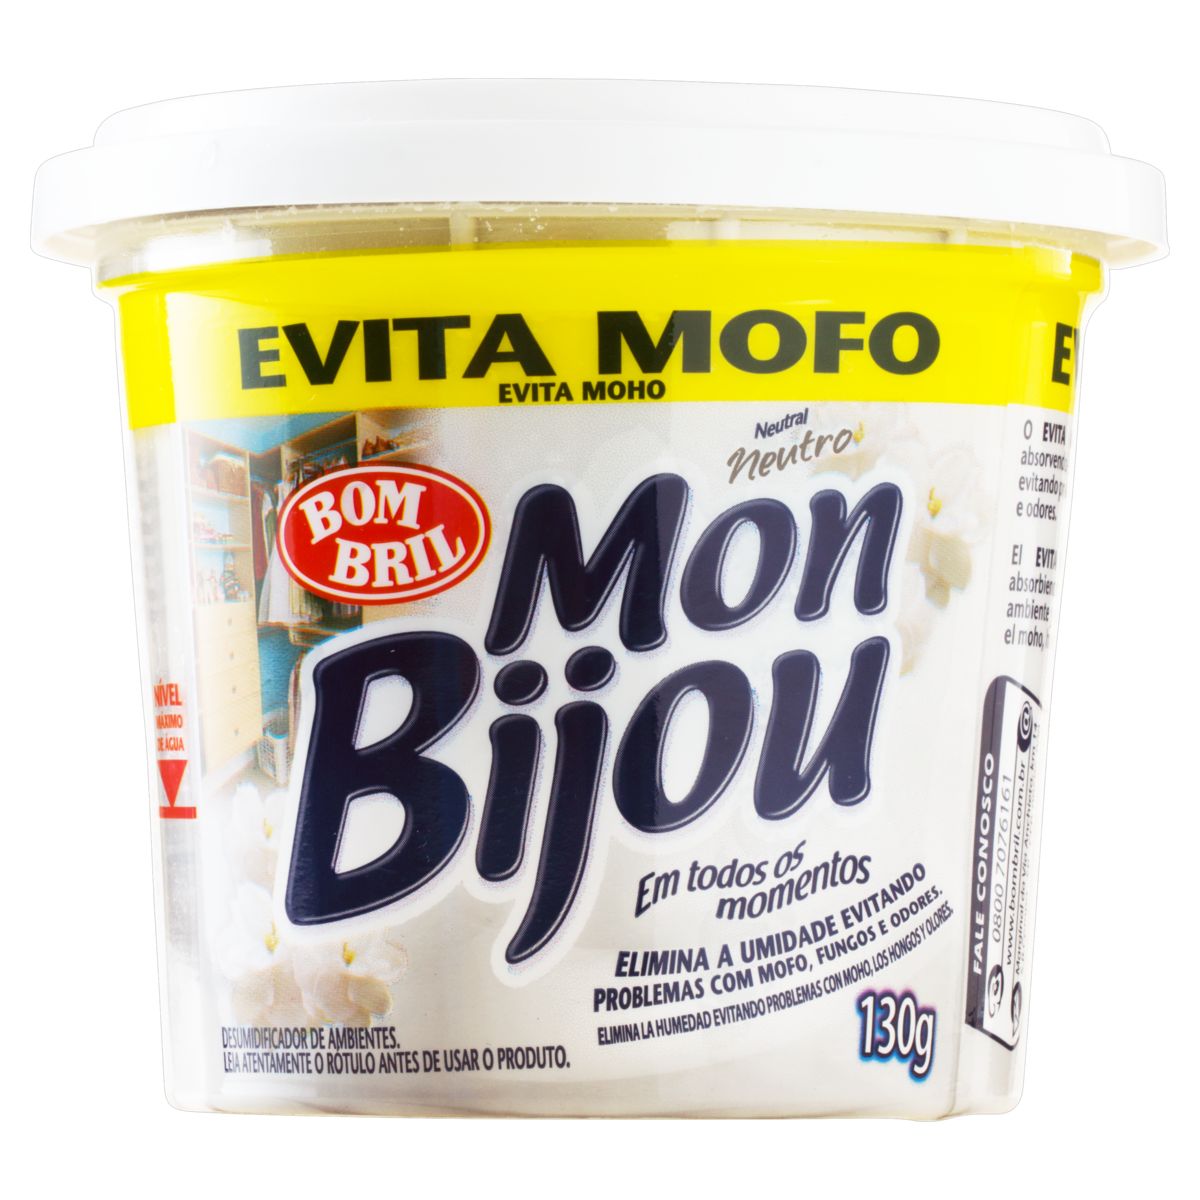 Evita Mofo Mon Bijou Neutro 130g